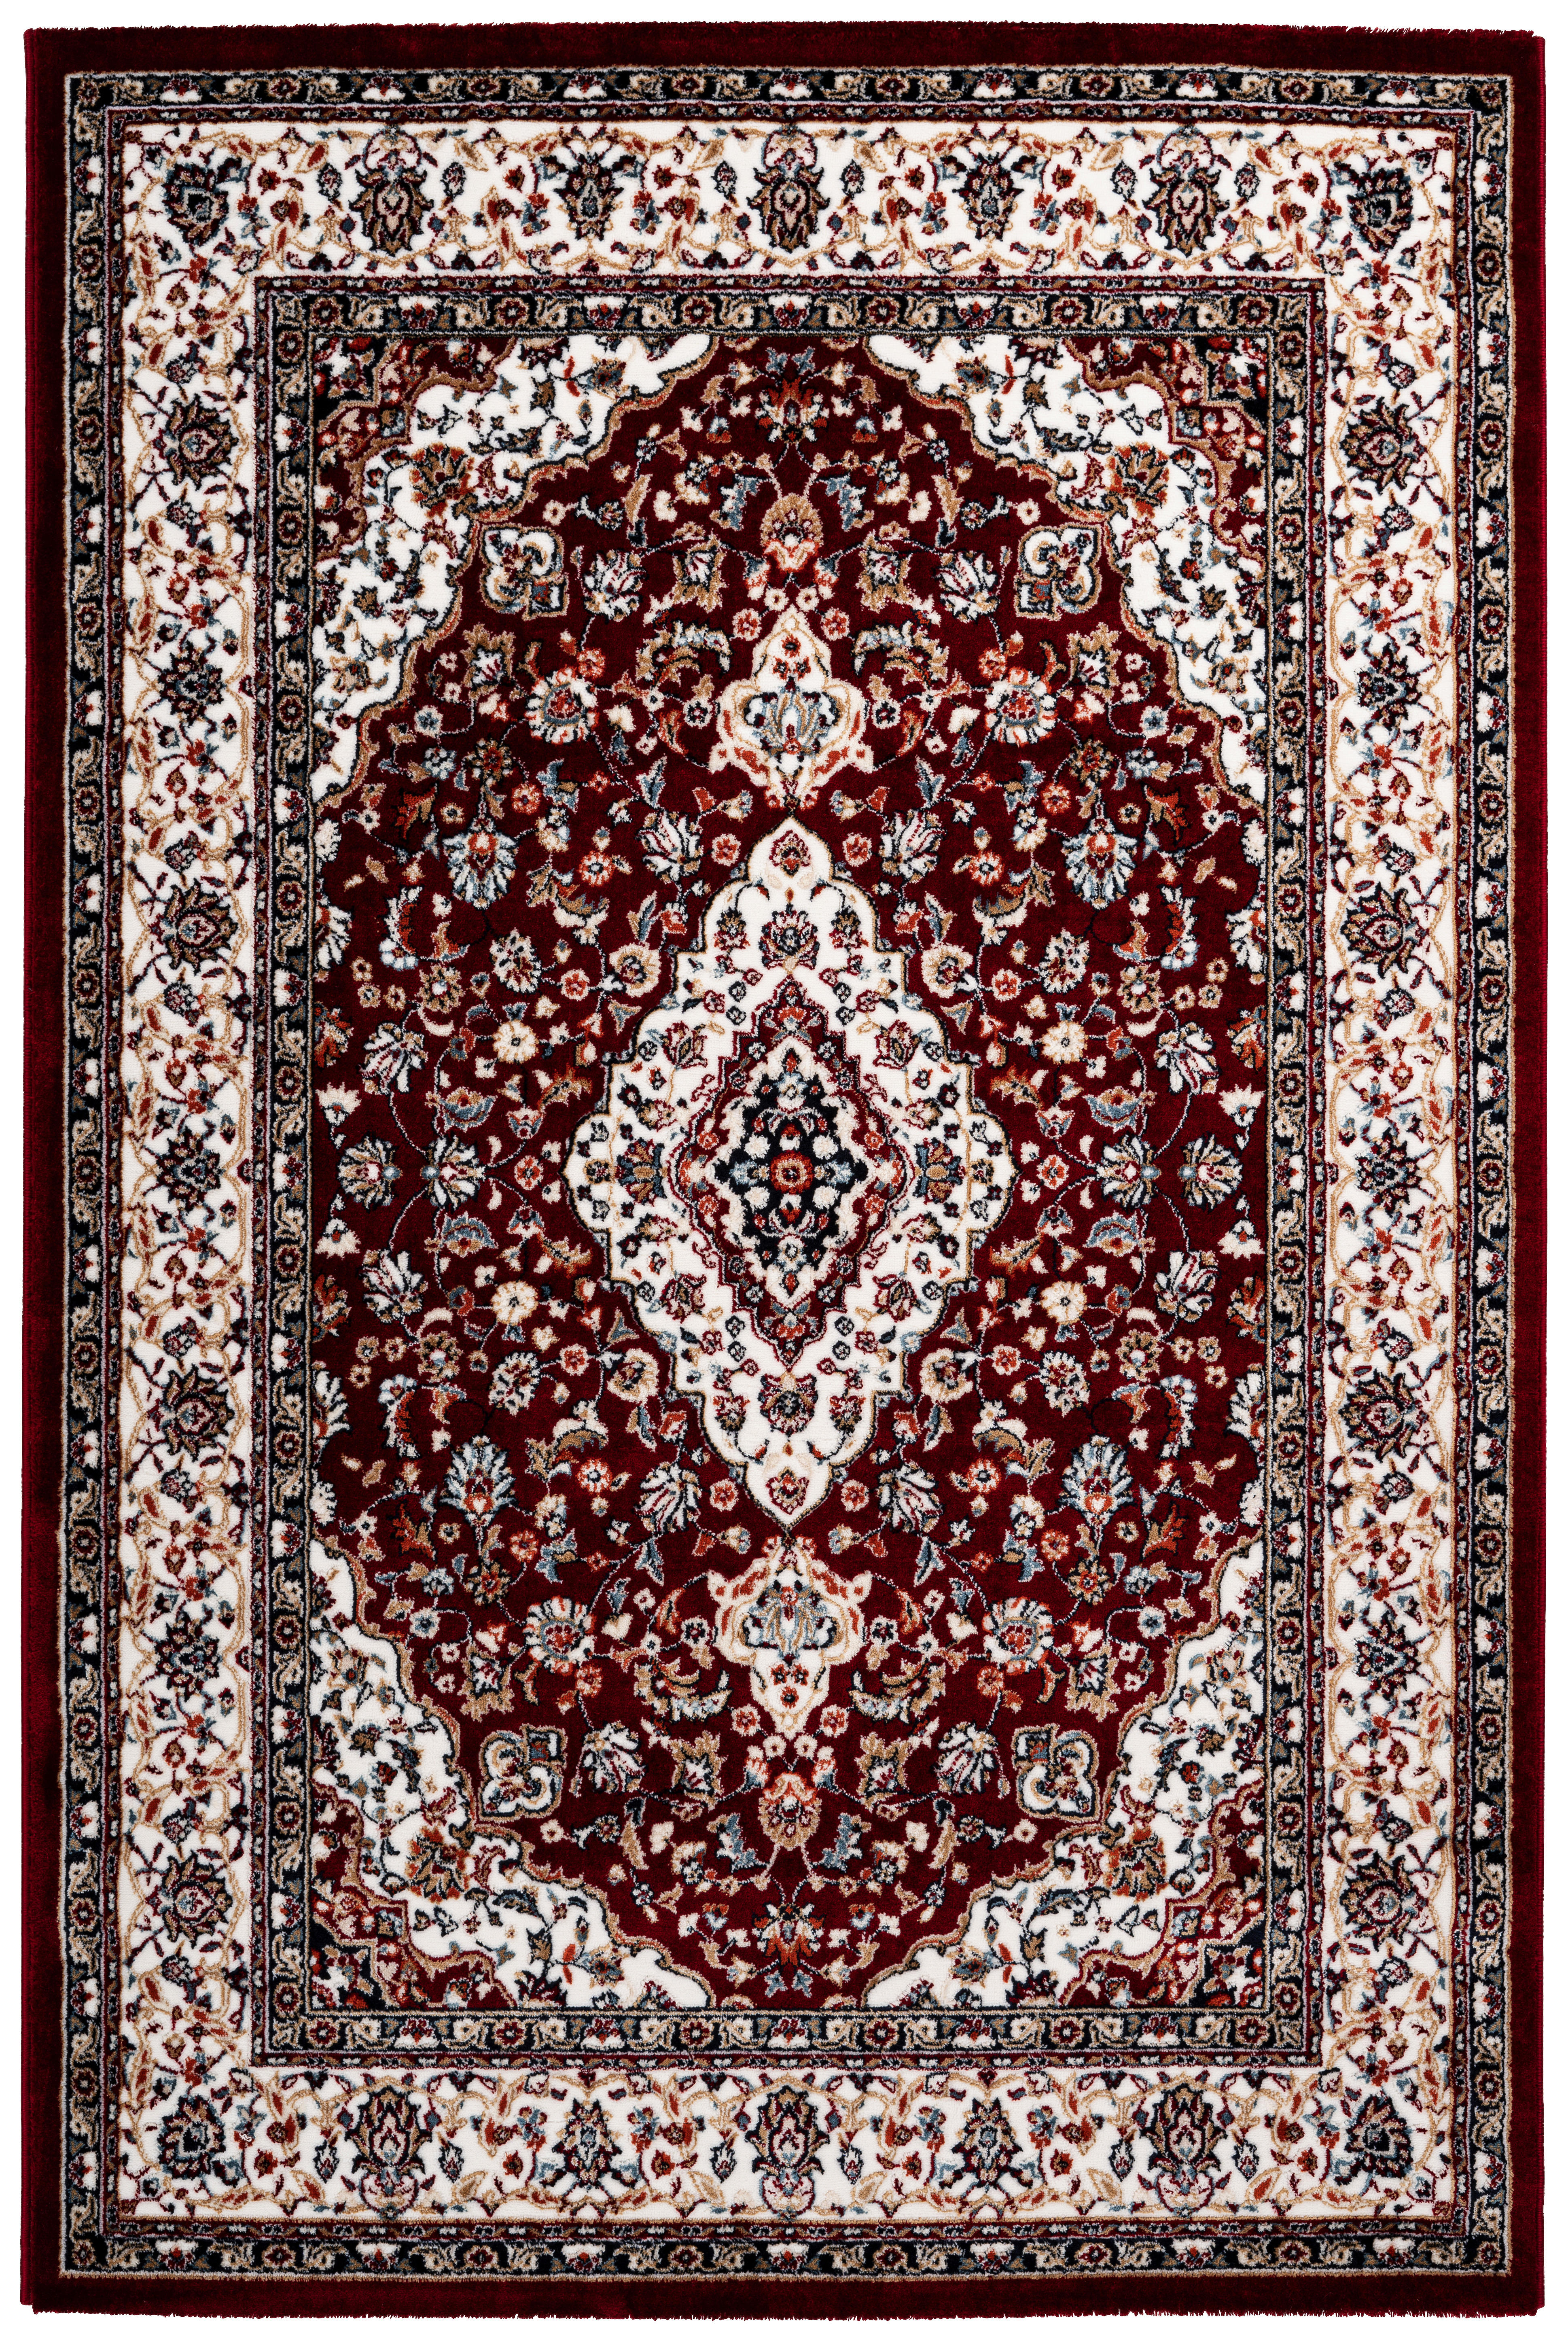 Teppich My Orient Rot B/l: Ca. 80x150 Cm My Orient - rot (80,00/150,00cm)